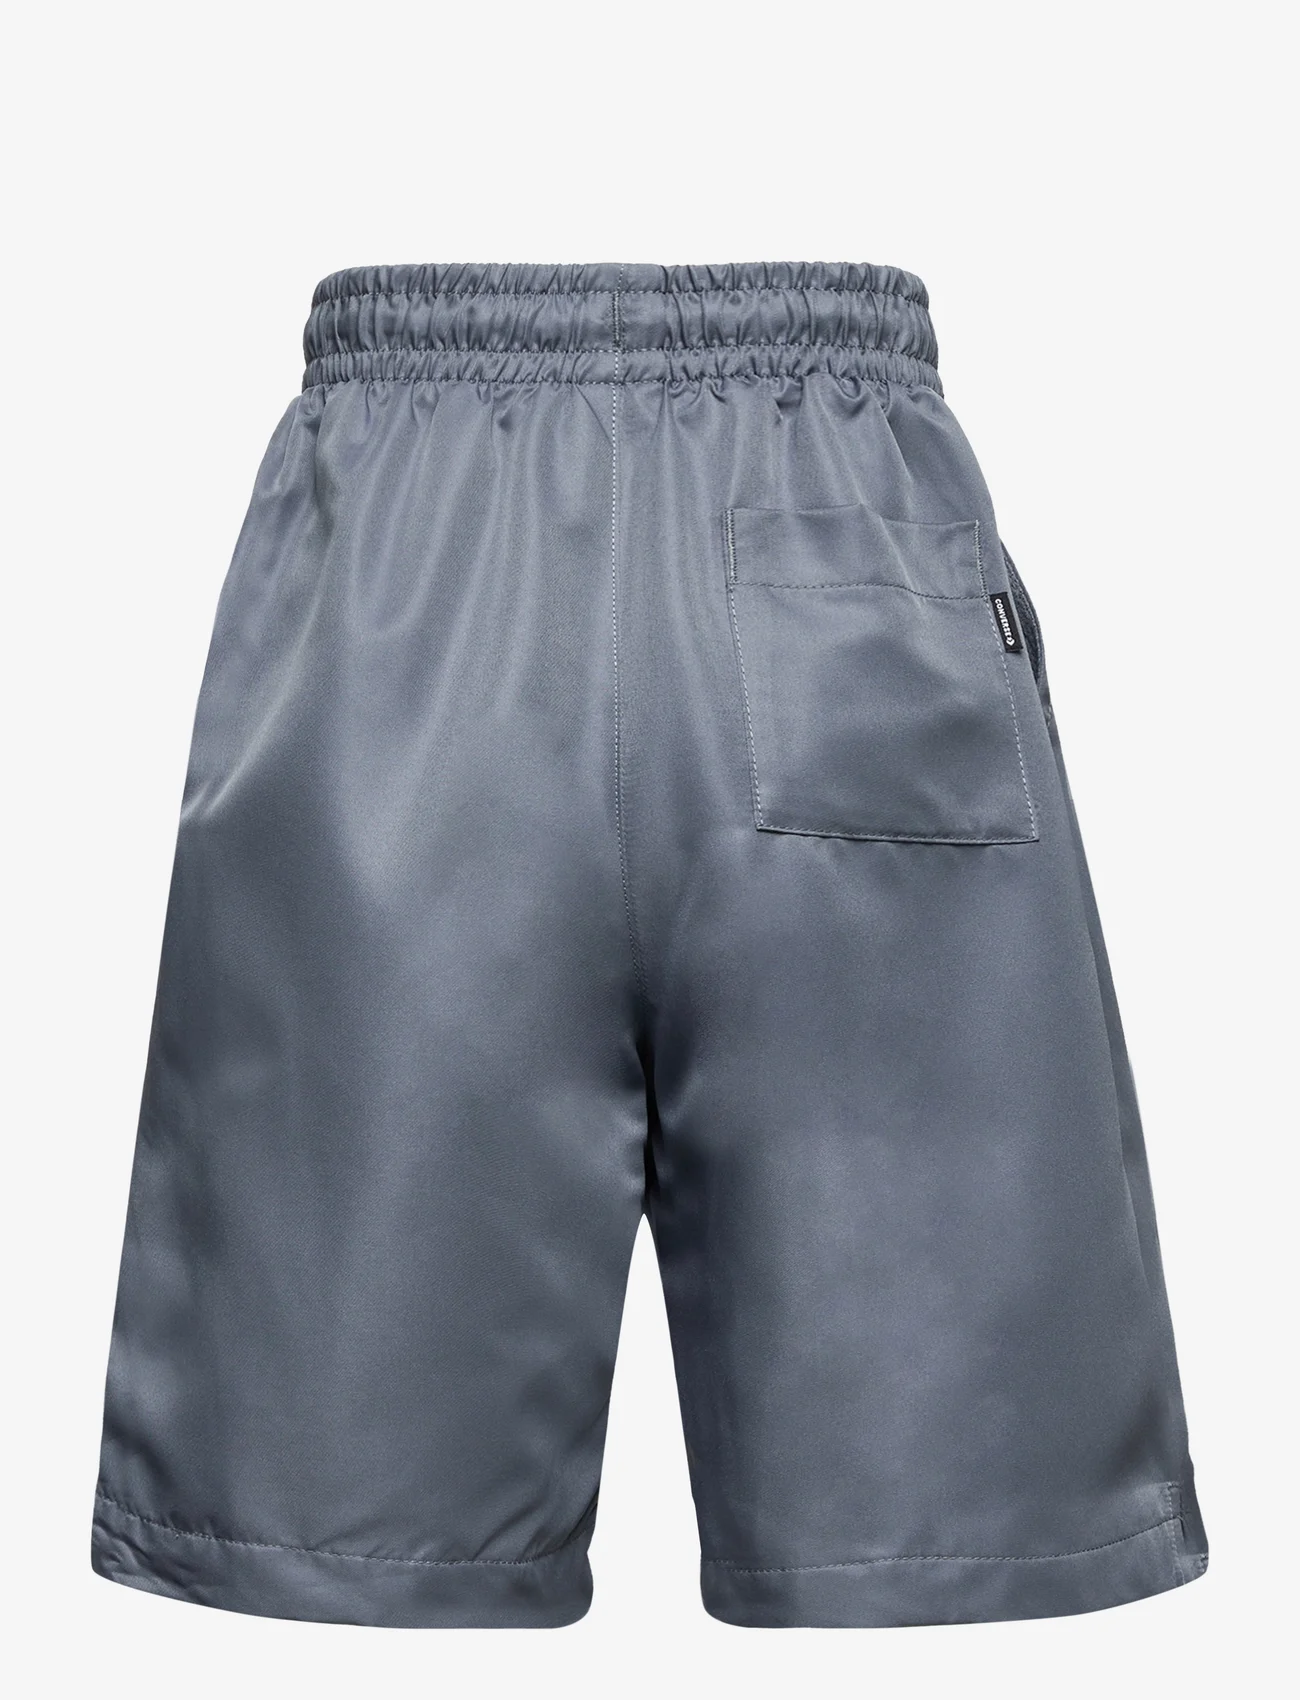 Converse - CHUCK PATCH TWILL SHORT - sport-shorts - lunar grey - 1